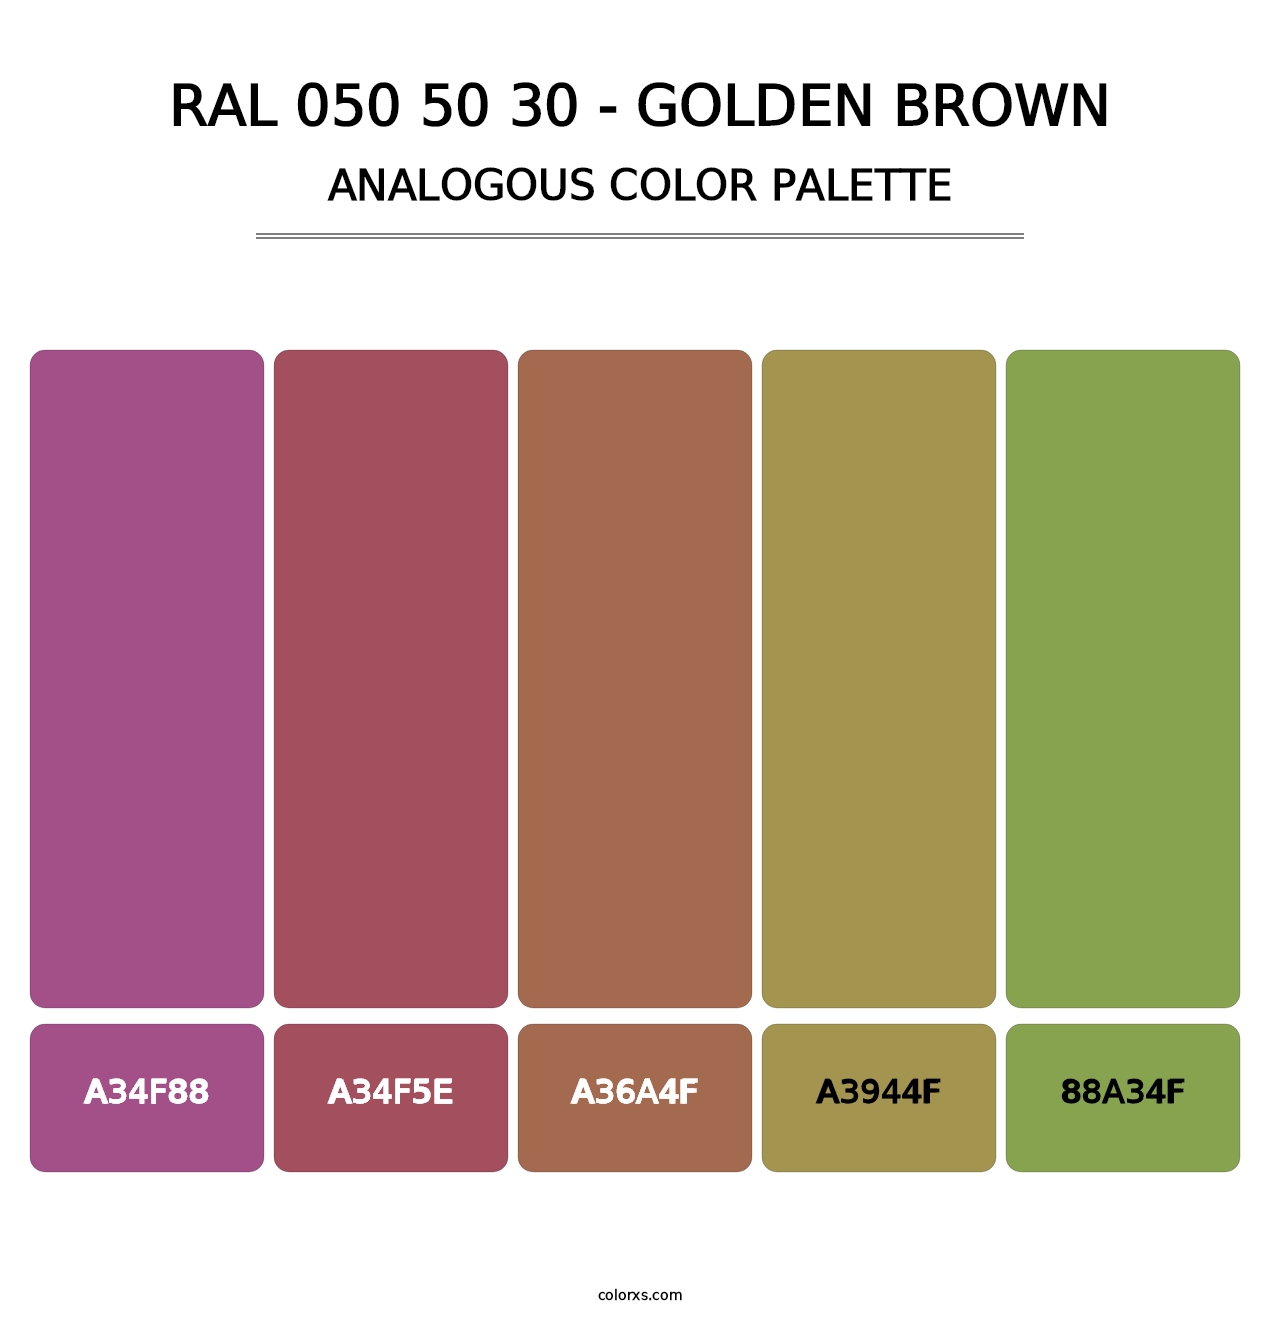 RAL 050 50 30 - Golden Brown - Analogous Color Palette